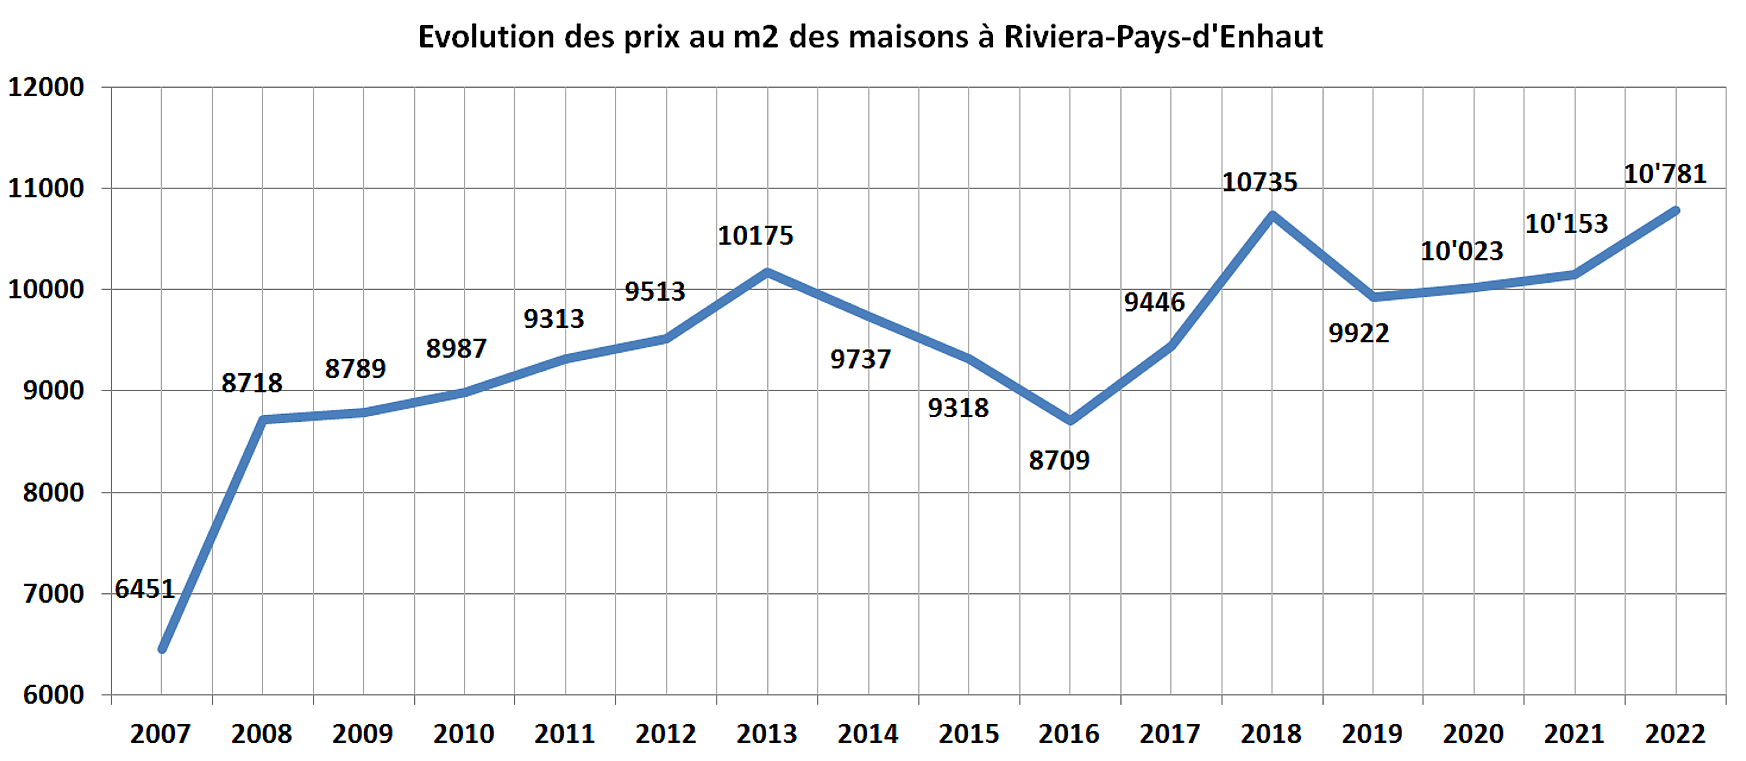 evolution prix m2 maison riviera pays denhaut 2022